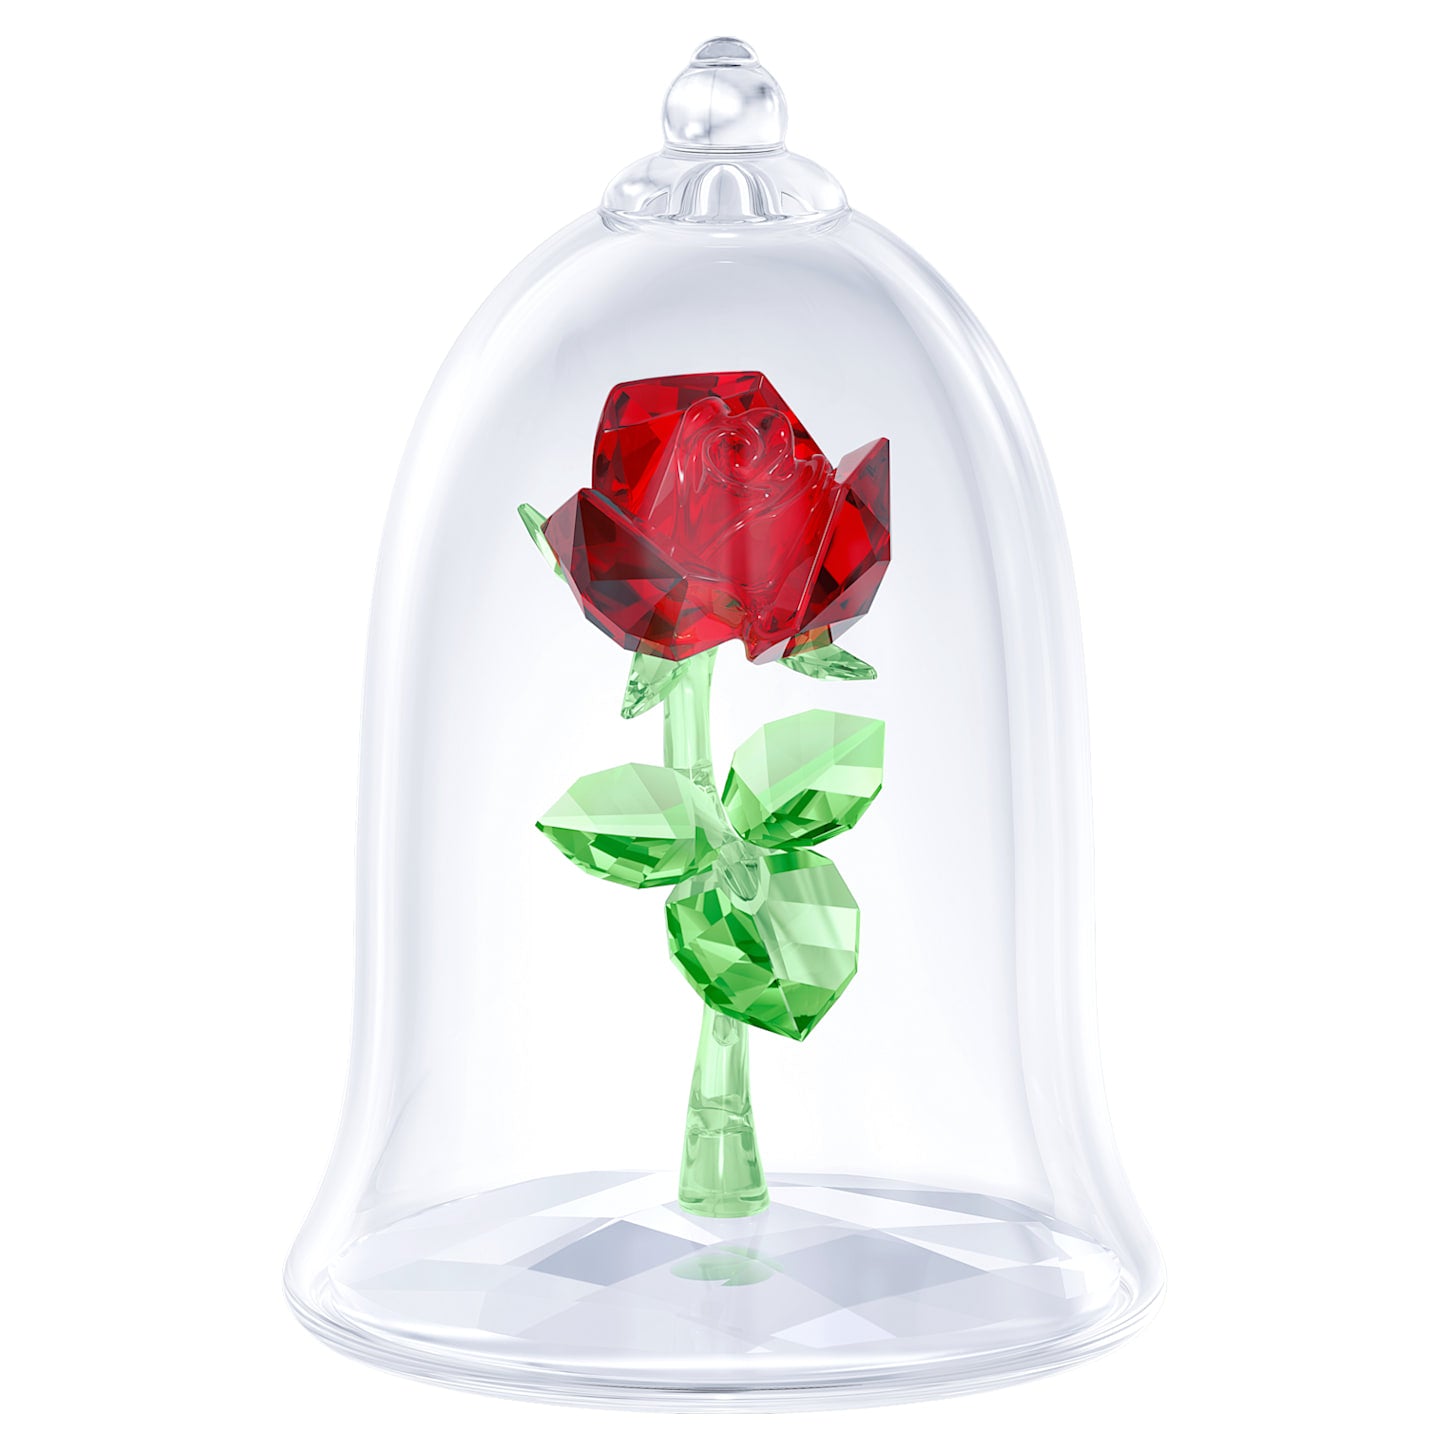 Beauty and the Beast - Enchanted Rose - Figurine - Swarovski